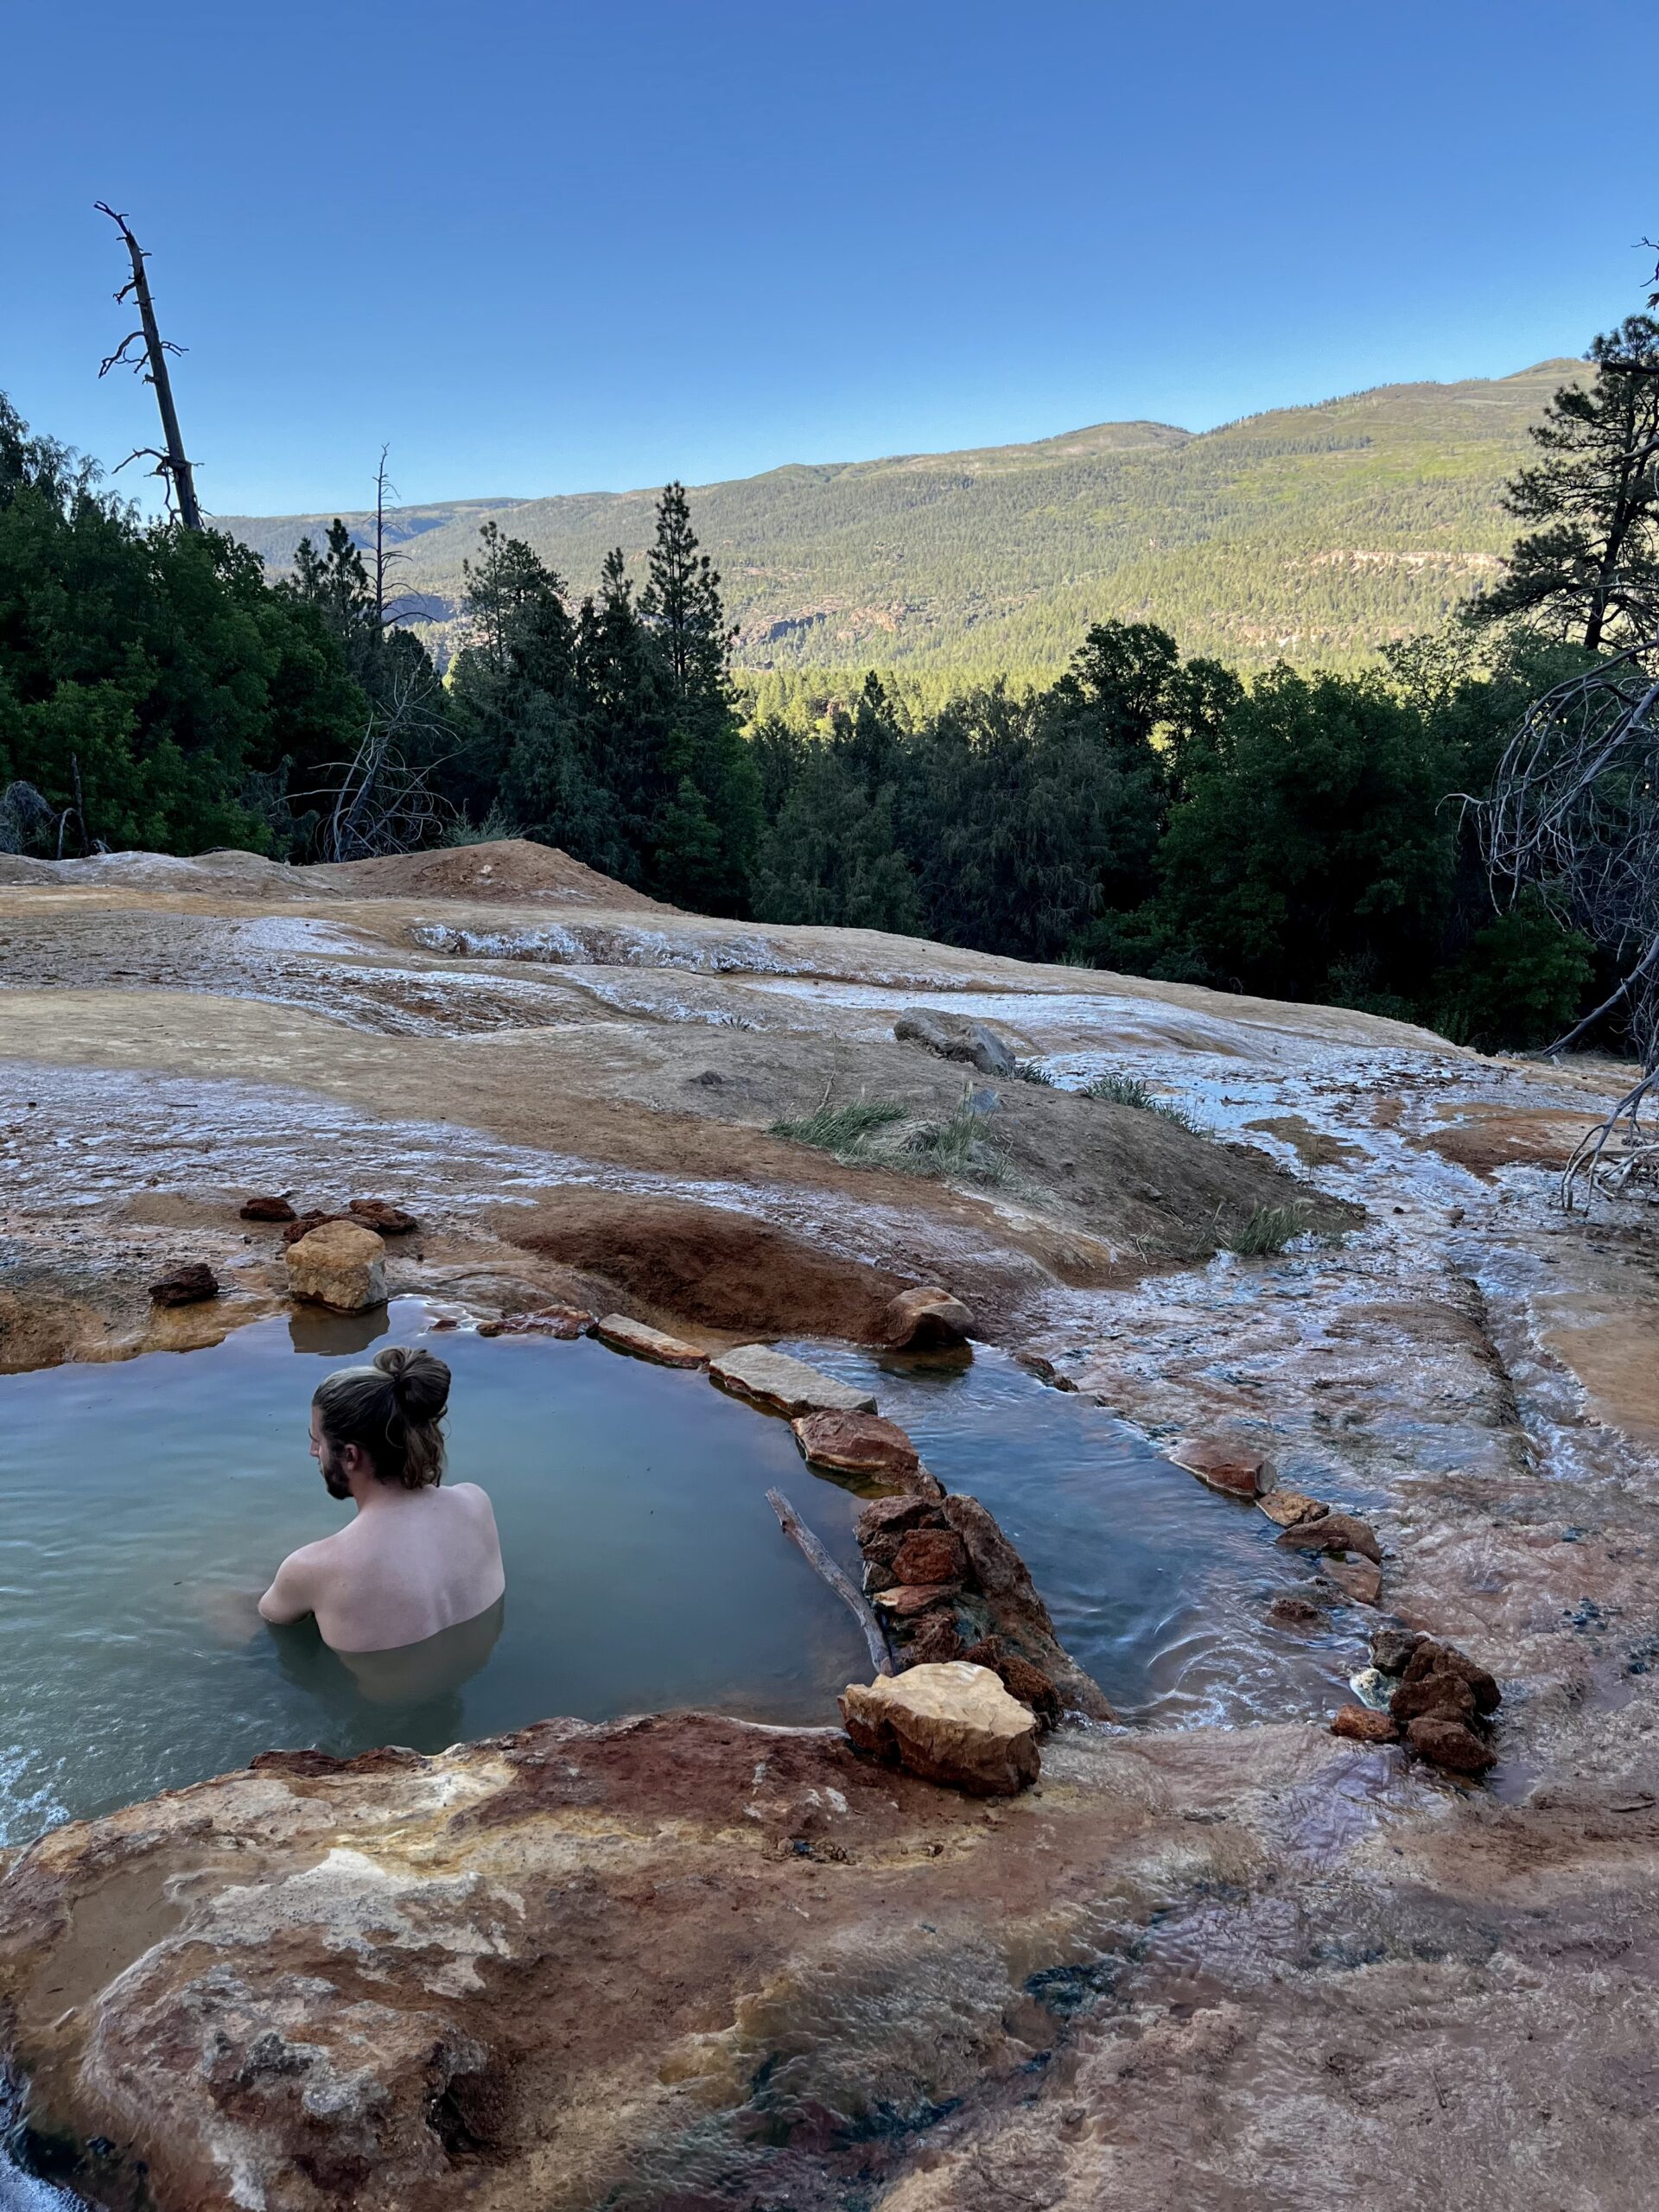 Luke relaxing in a hot spring